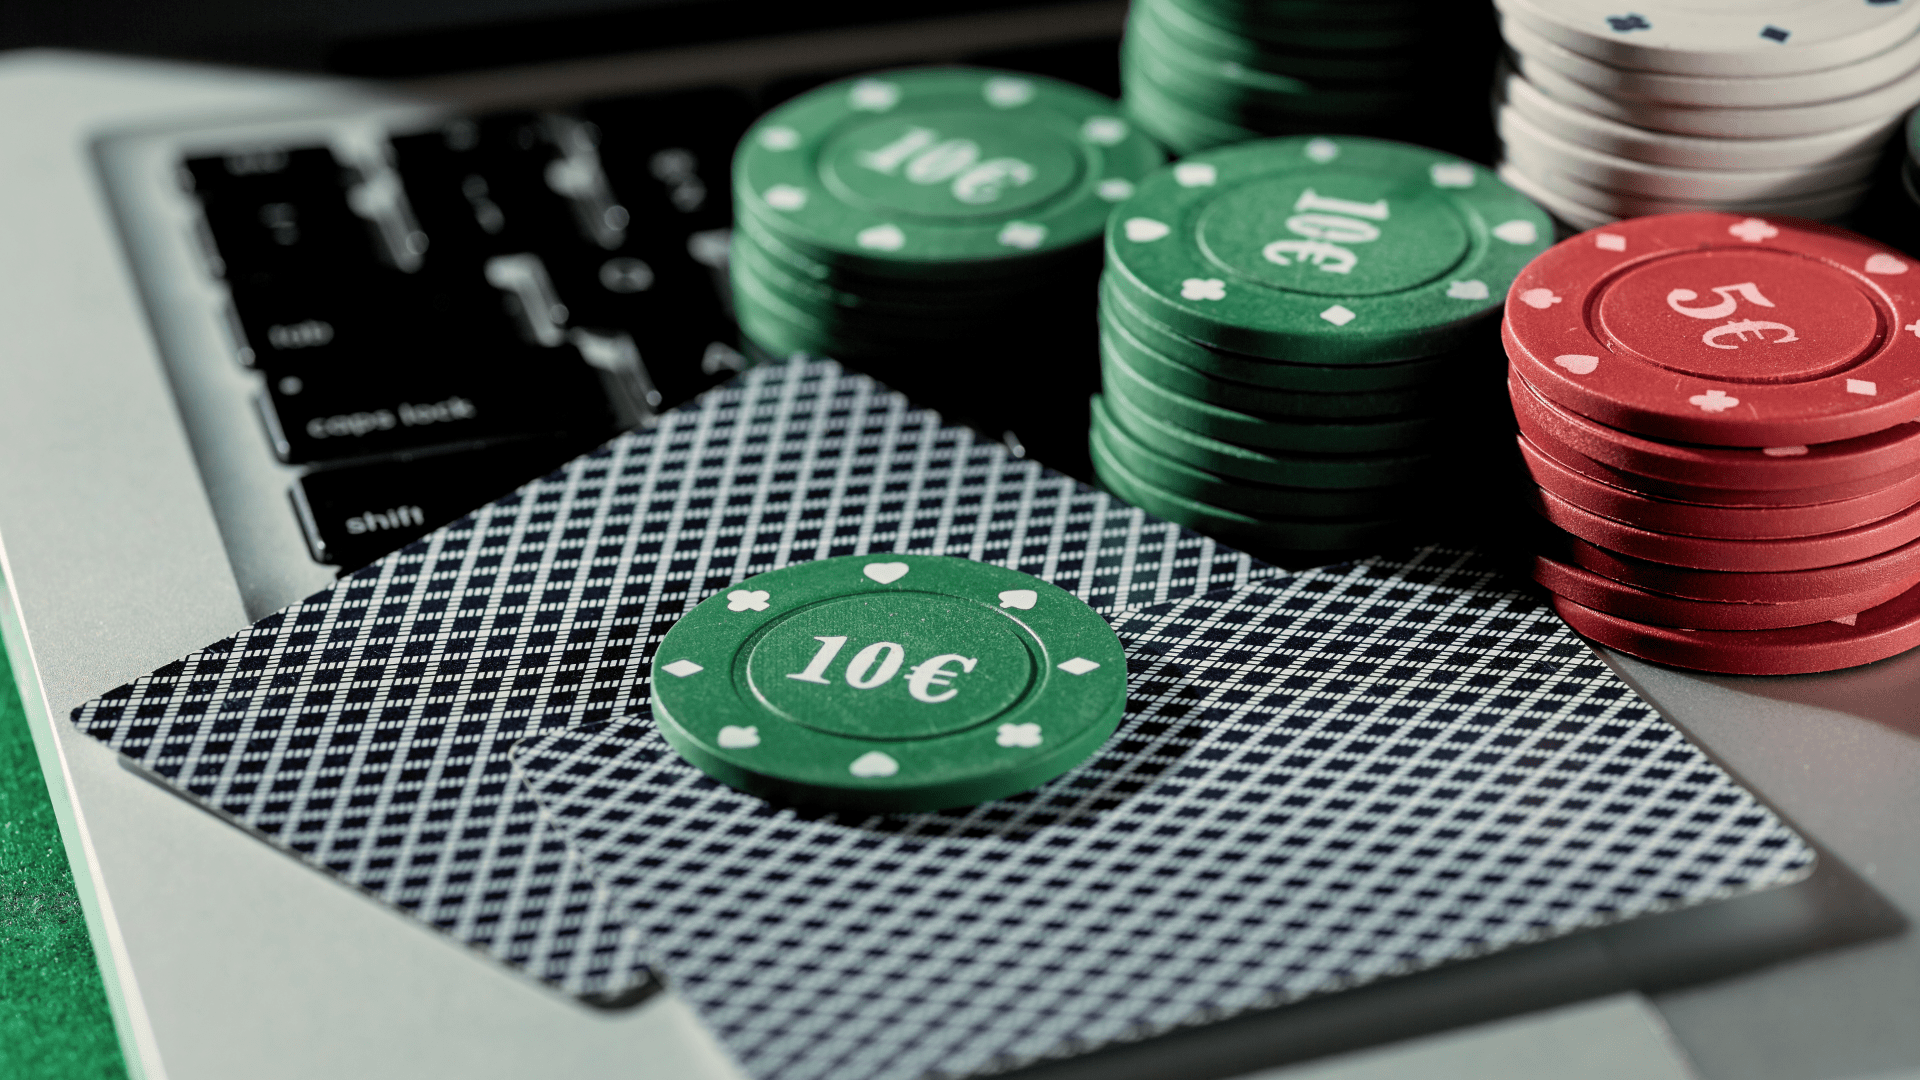 online casino profits benefit society